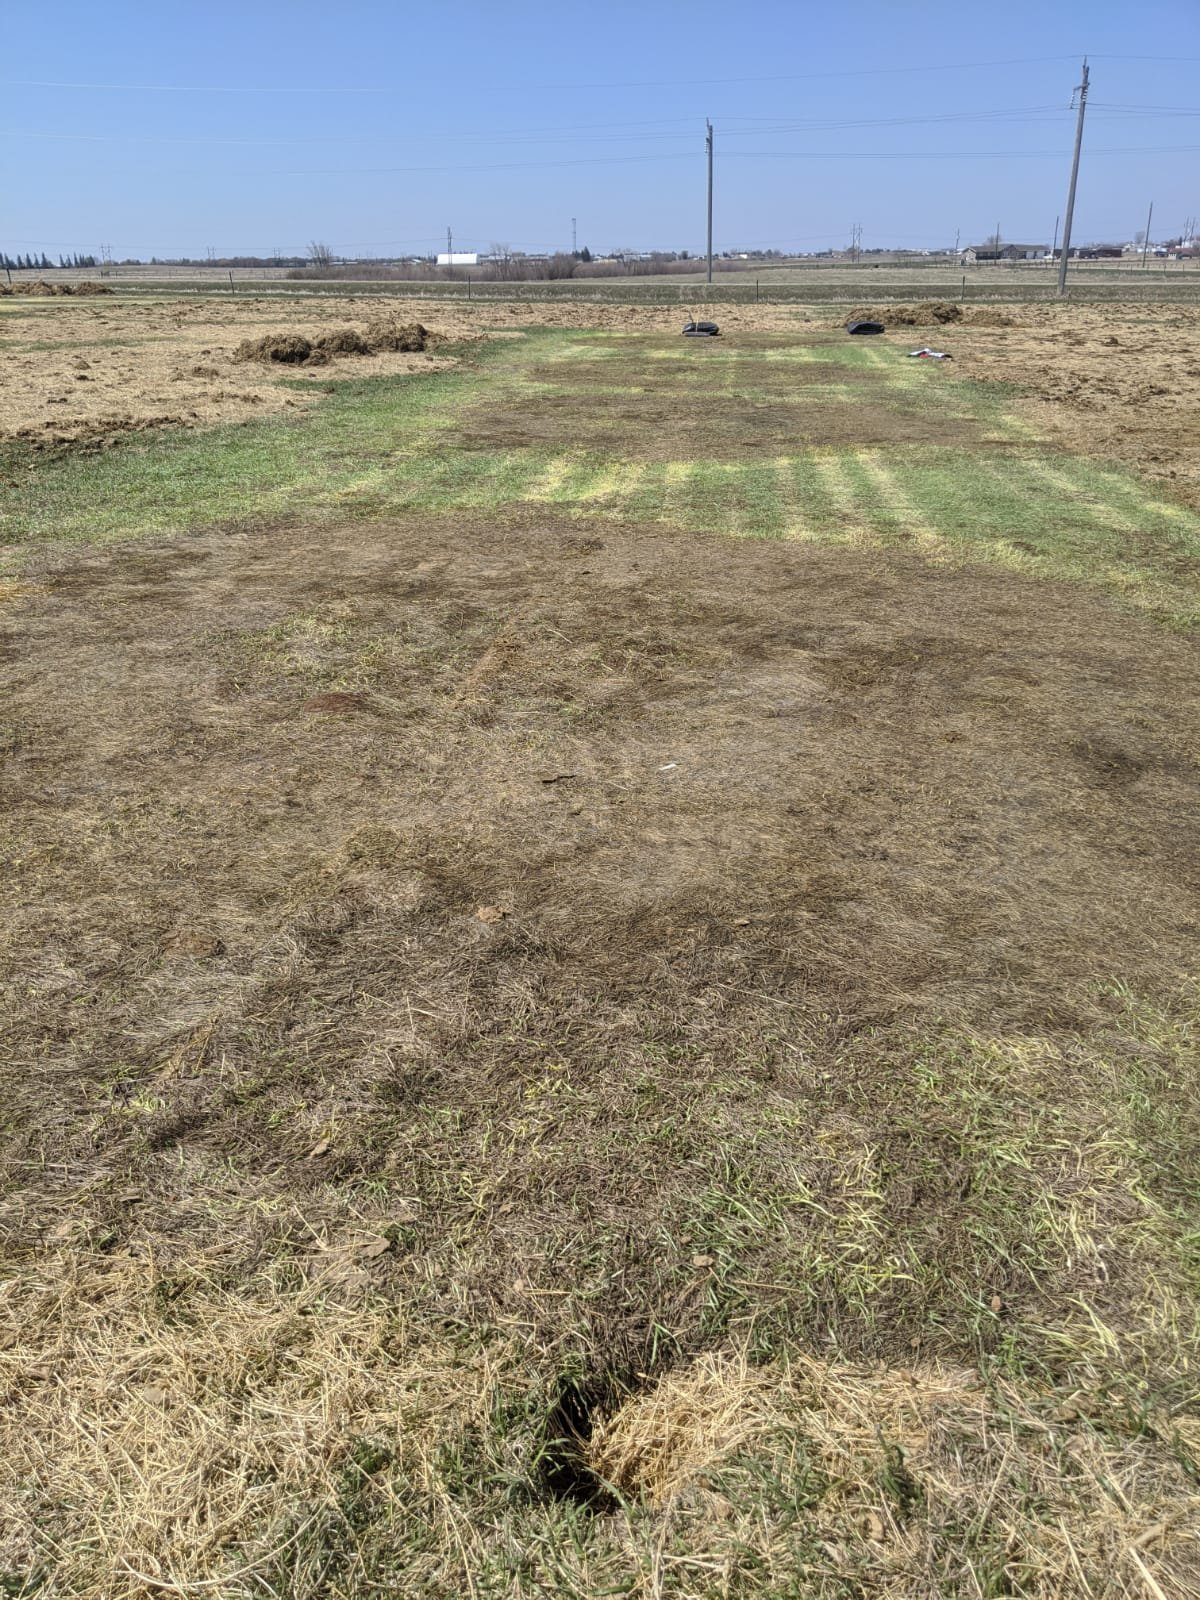 Grass immediately after tarp removal, May 16, 2020. Photo credit Leah Rodvang.